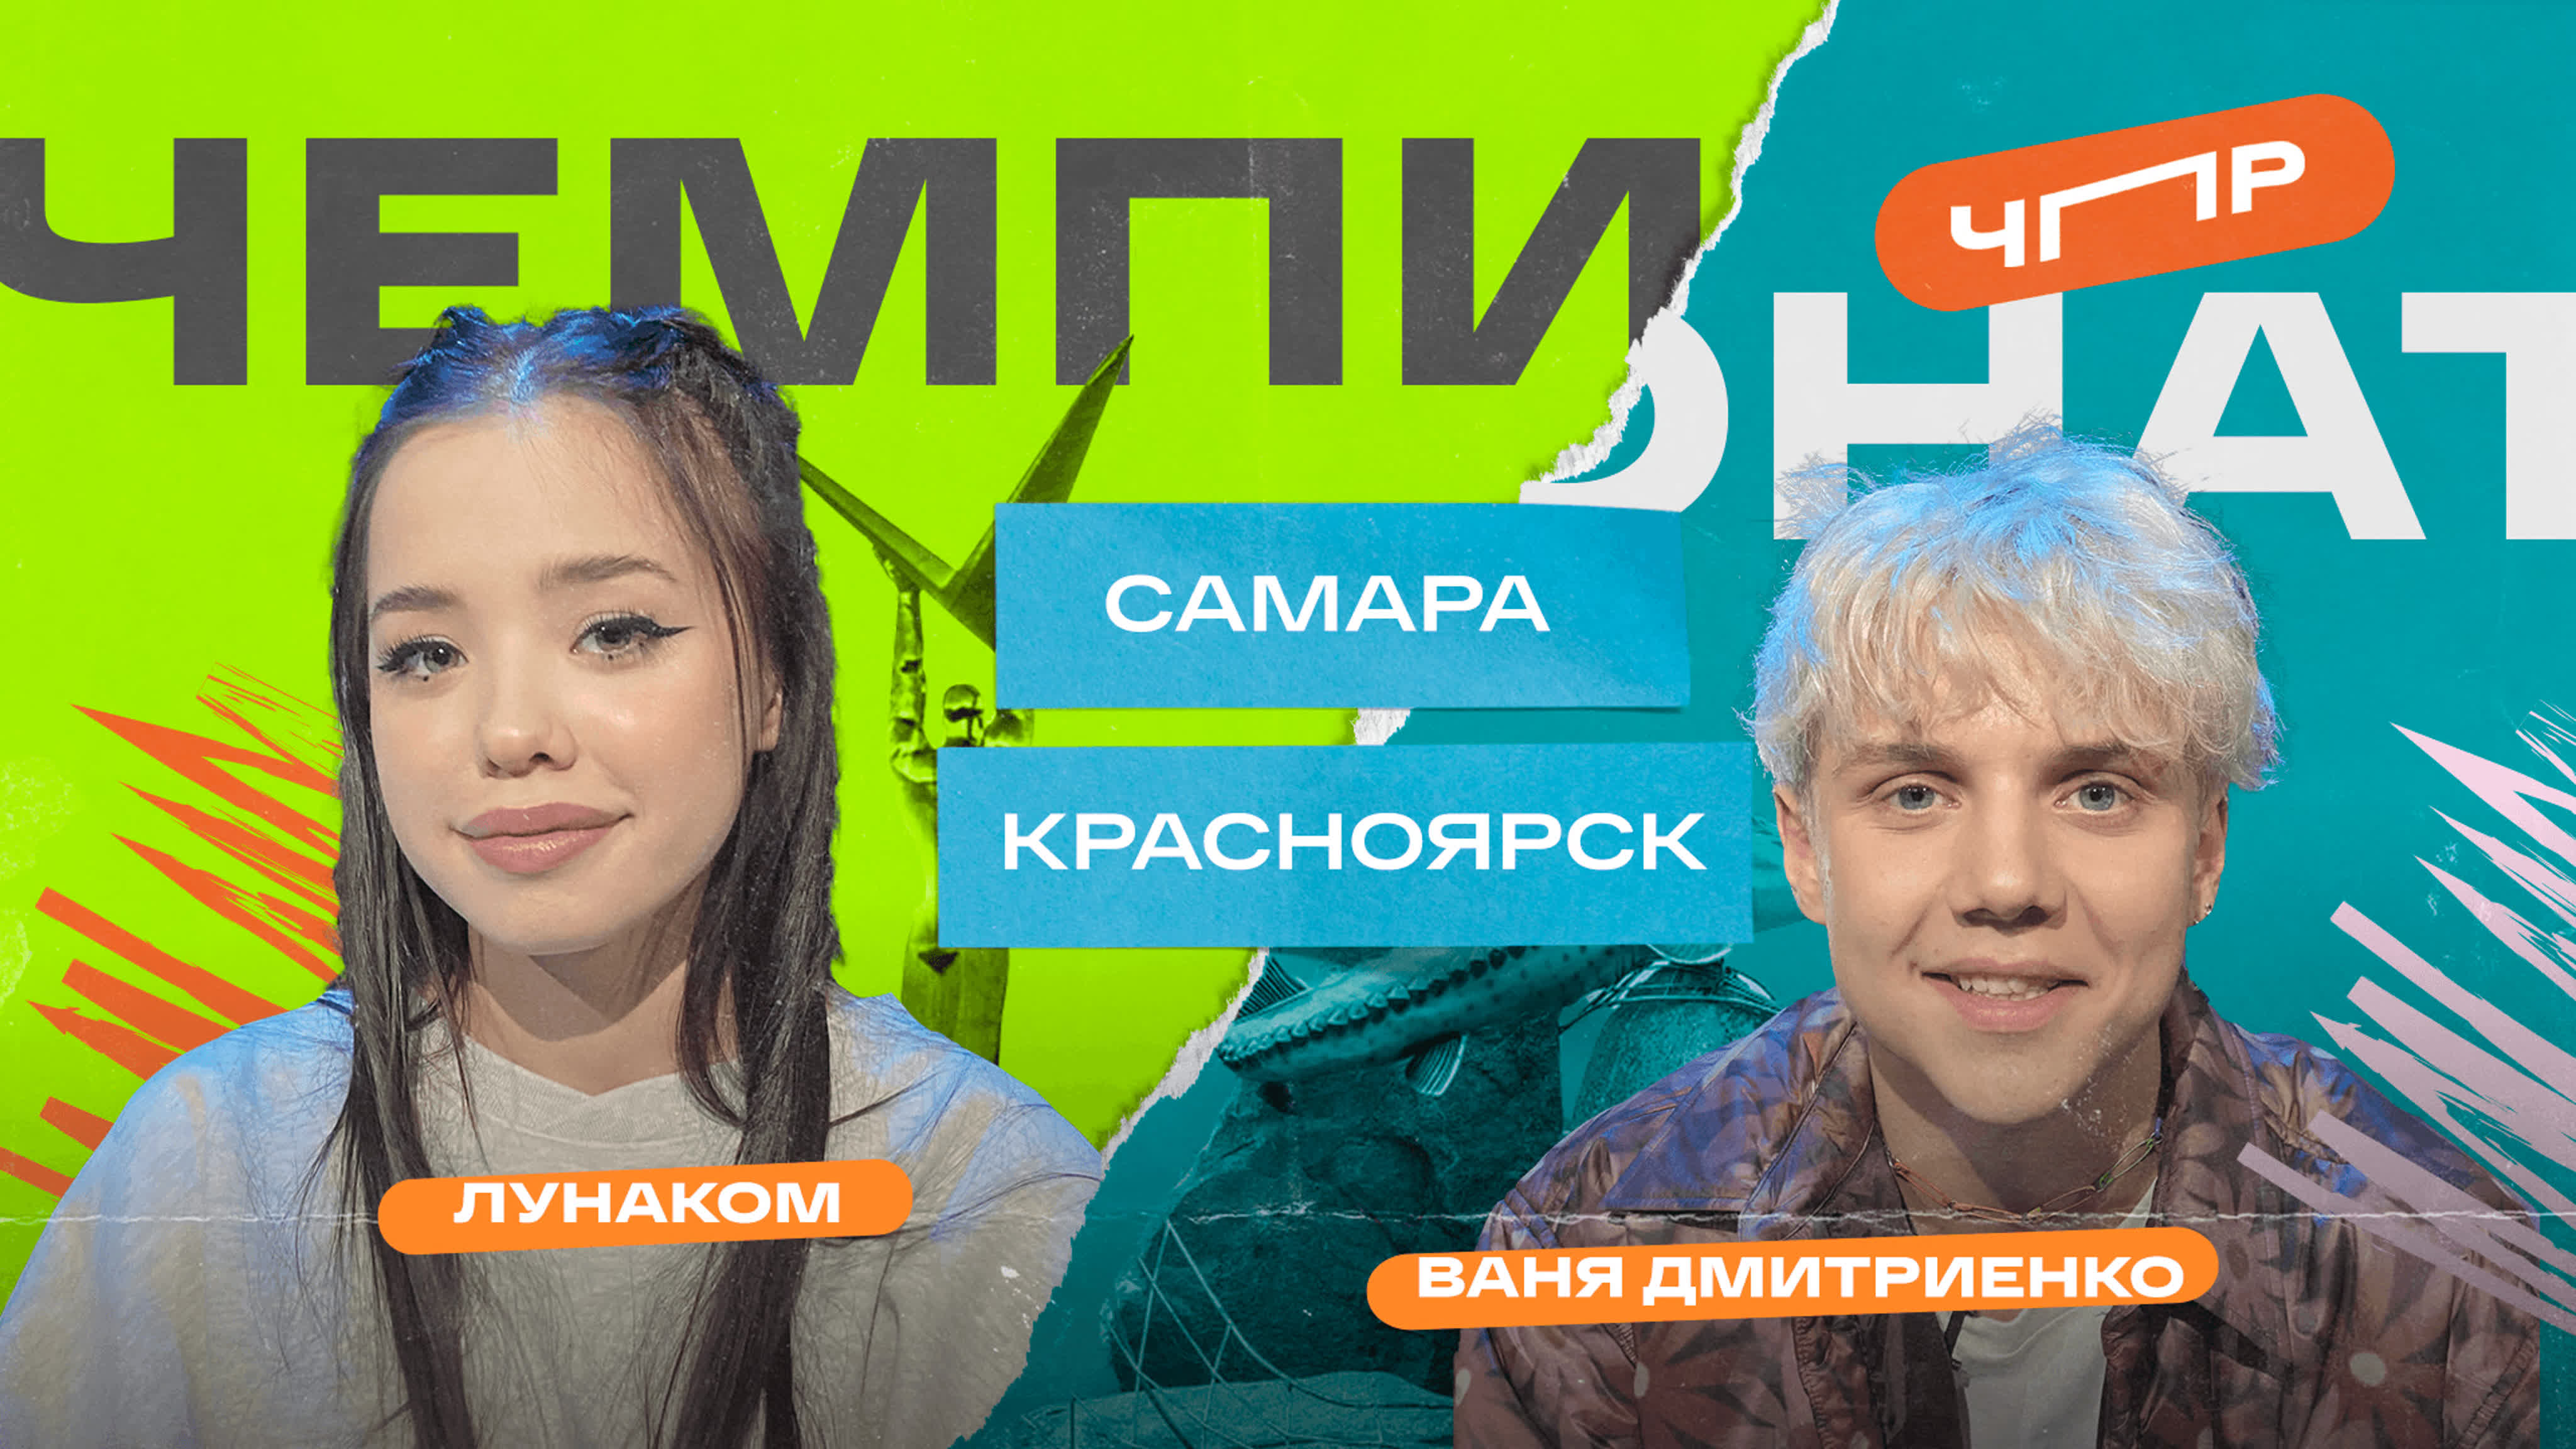 Чпр второй полуфинал самара vs красноярск лунаком vs ваня дмитриенко watch online